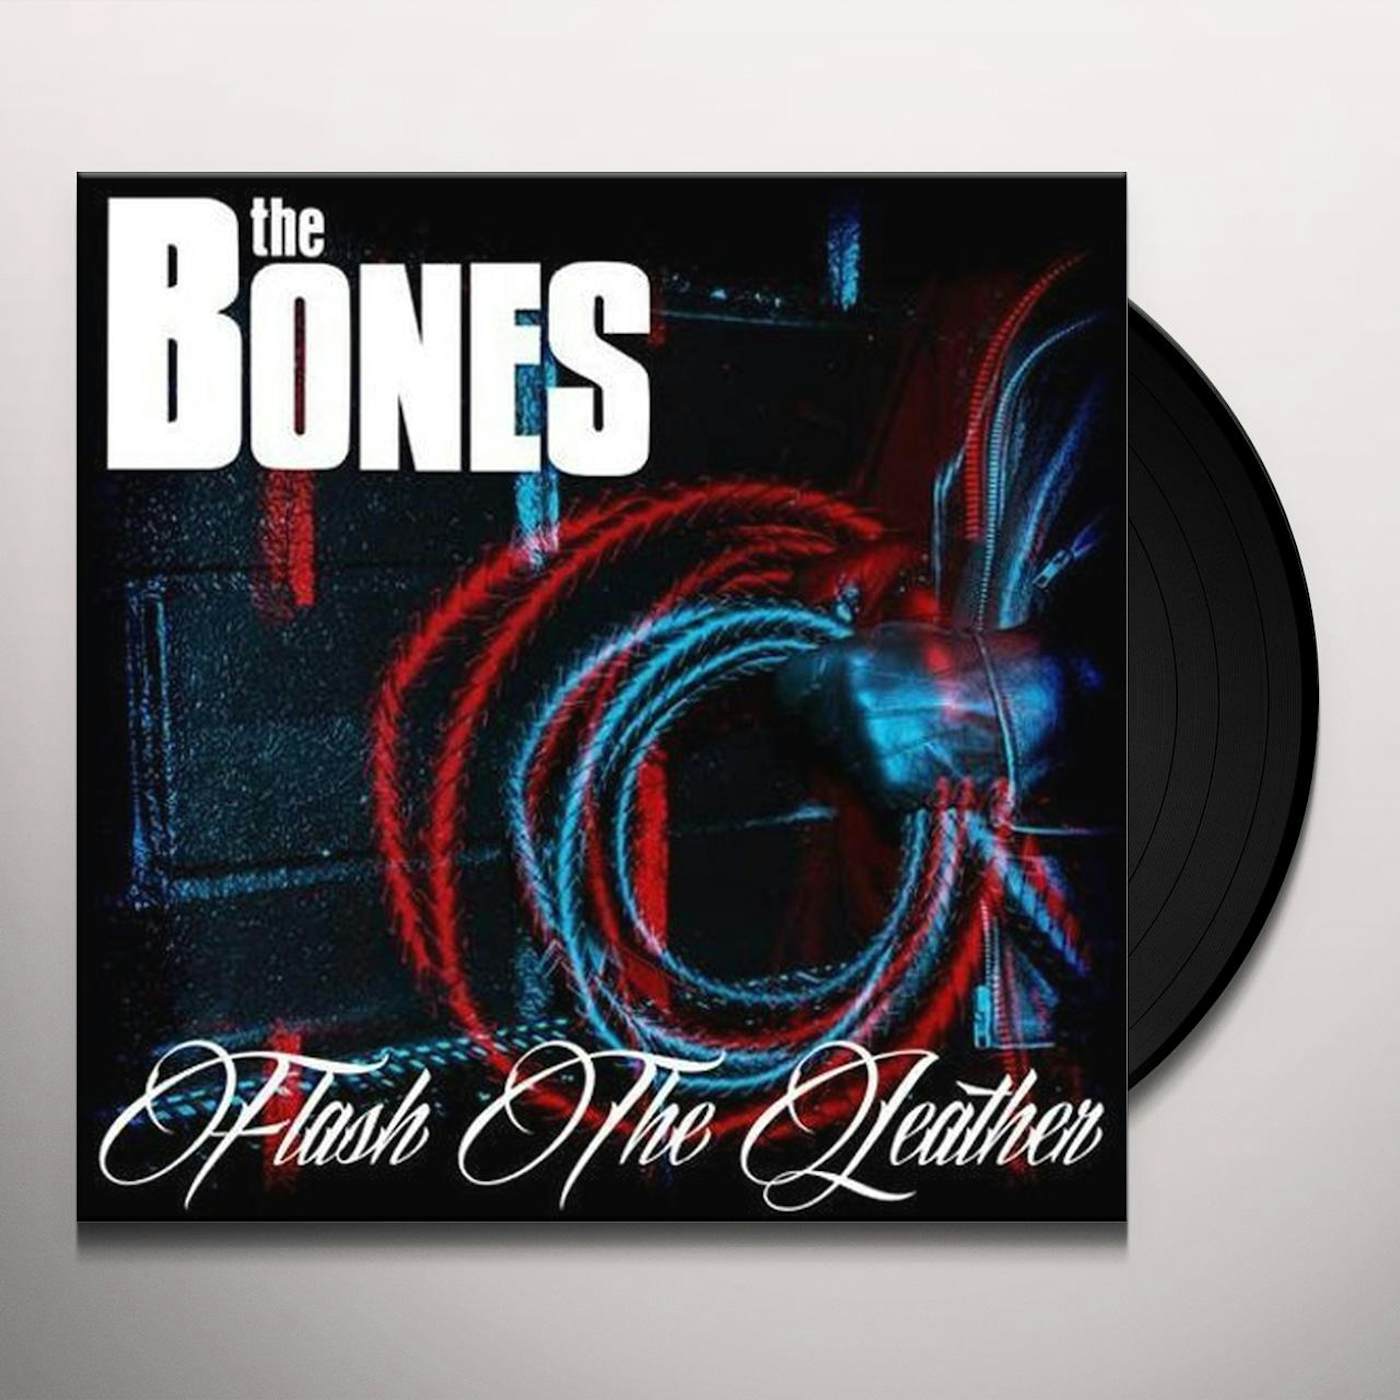 The Bones Flash The Leather Vinyl Record